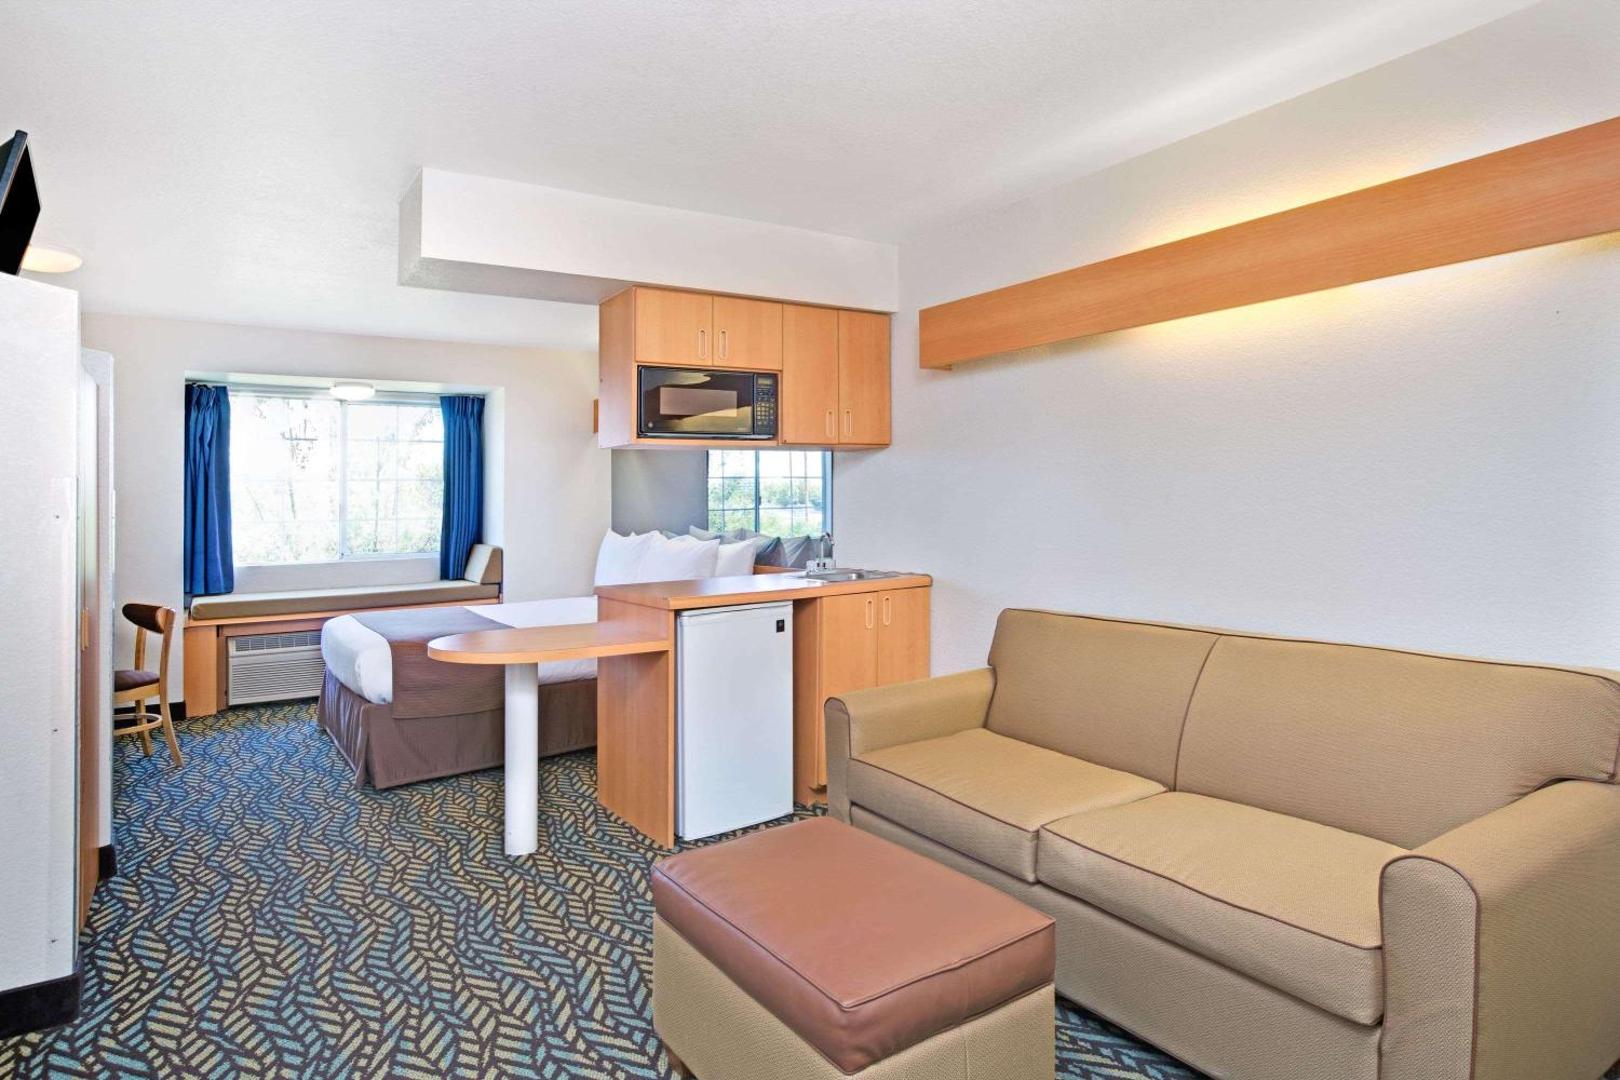 Microtel Inn & Suites by Wyndham Morgan Hill/San Jose Area